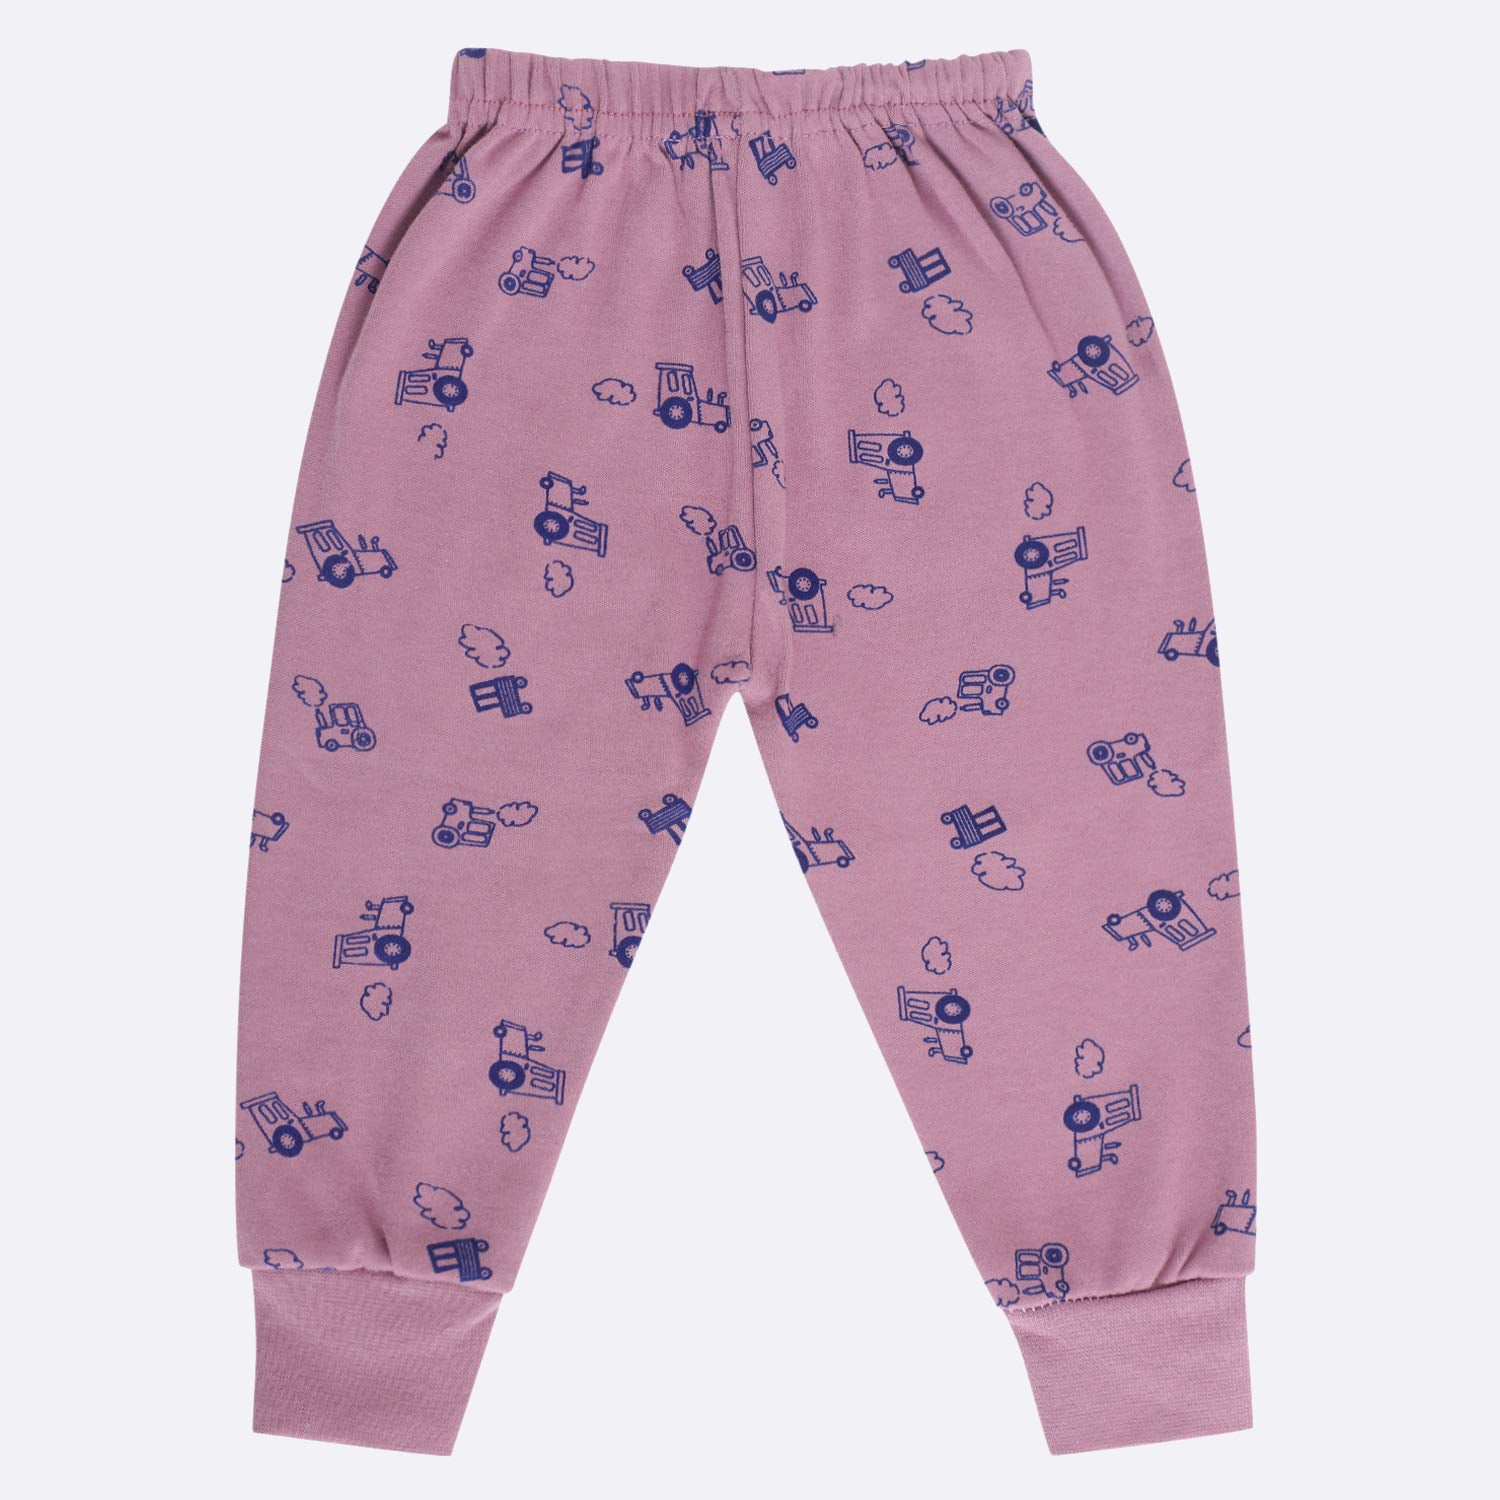 Feather Soft Dark Color Unisex Pyjama (Pink, Pack of 1)